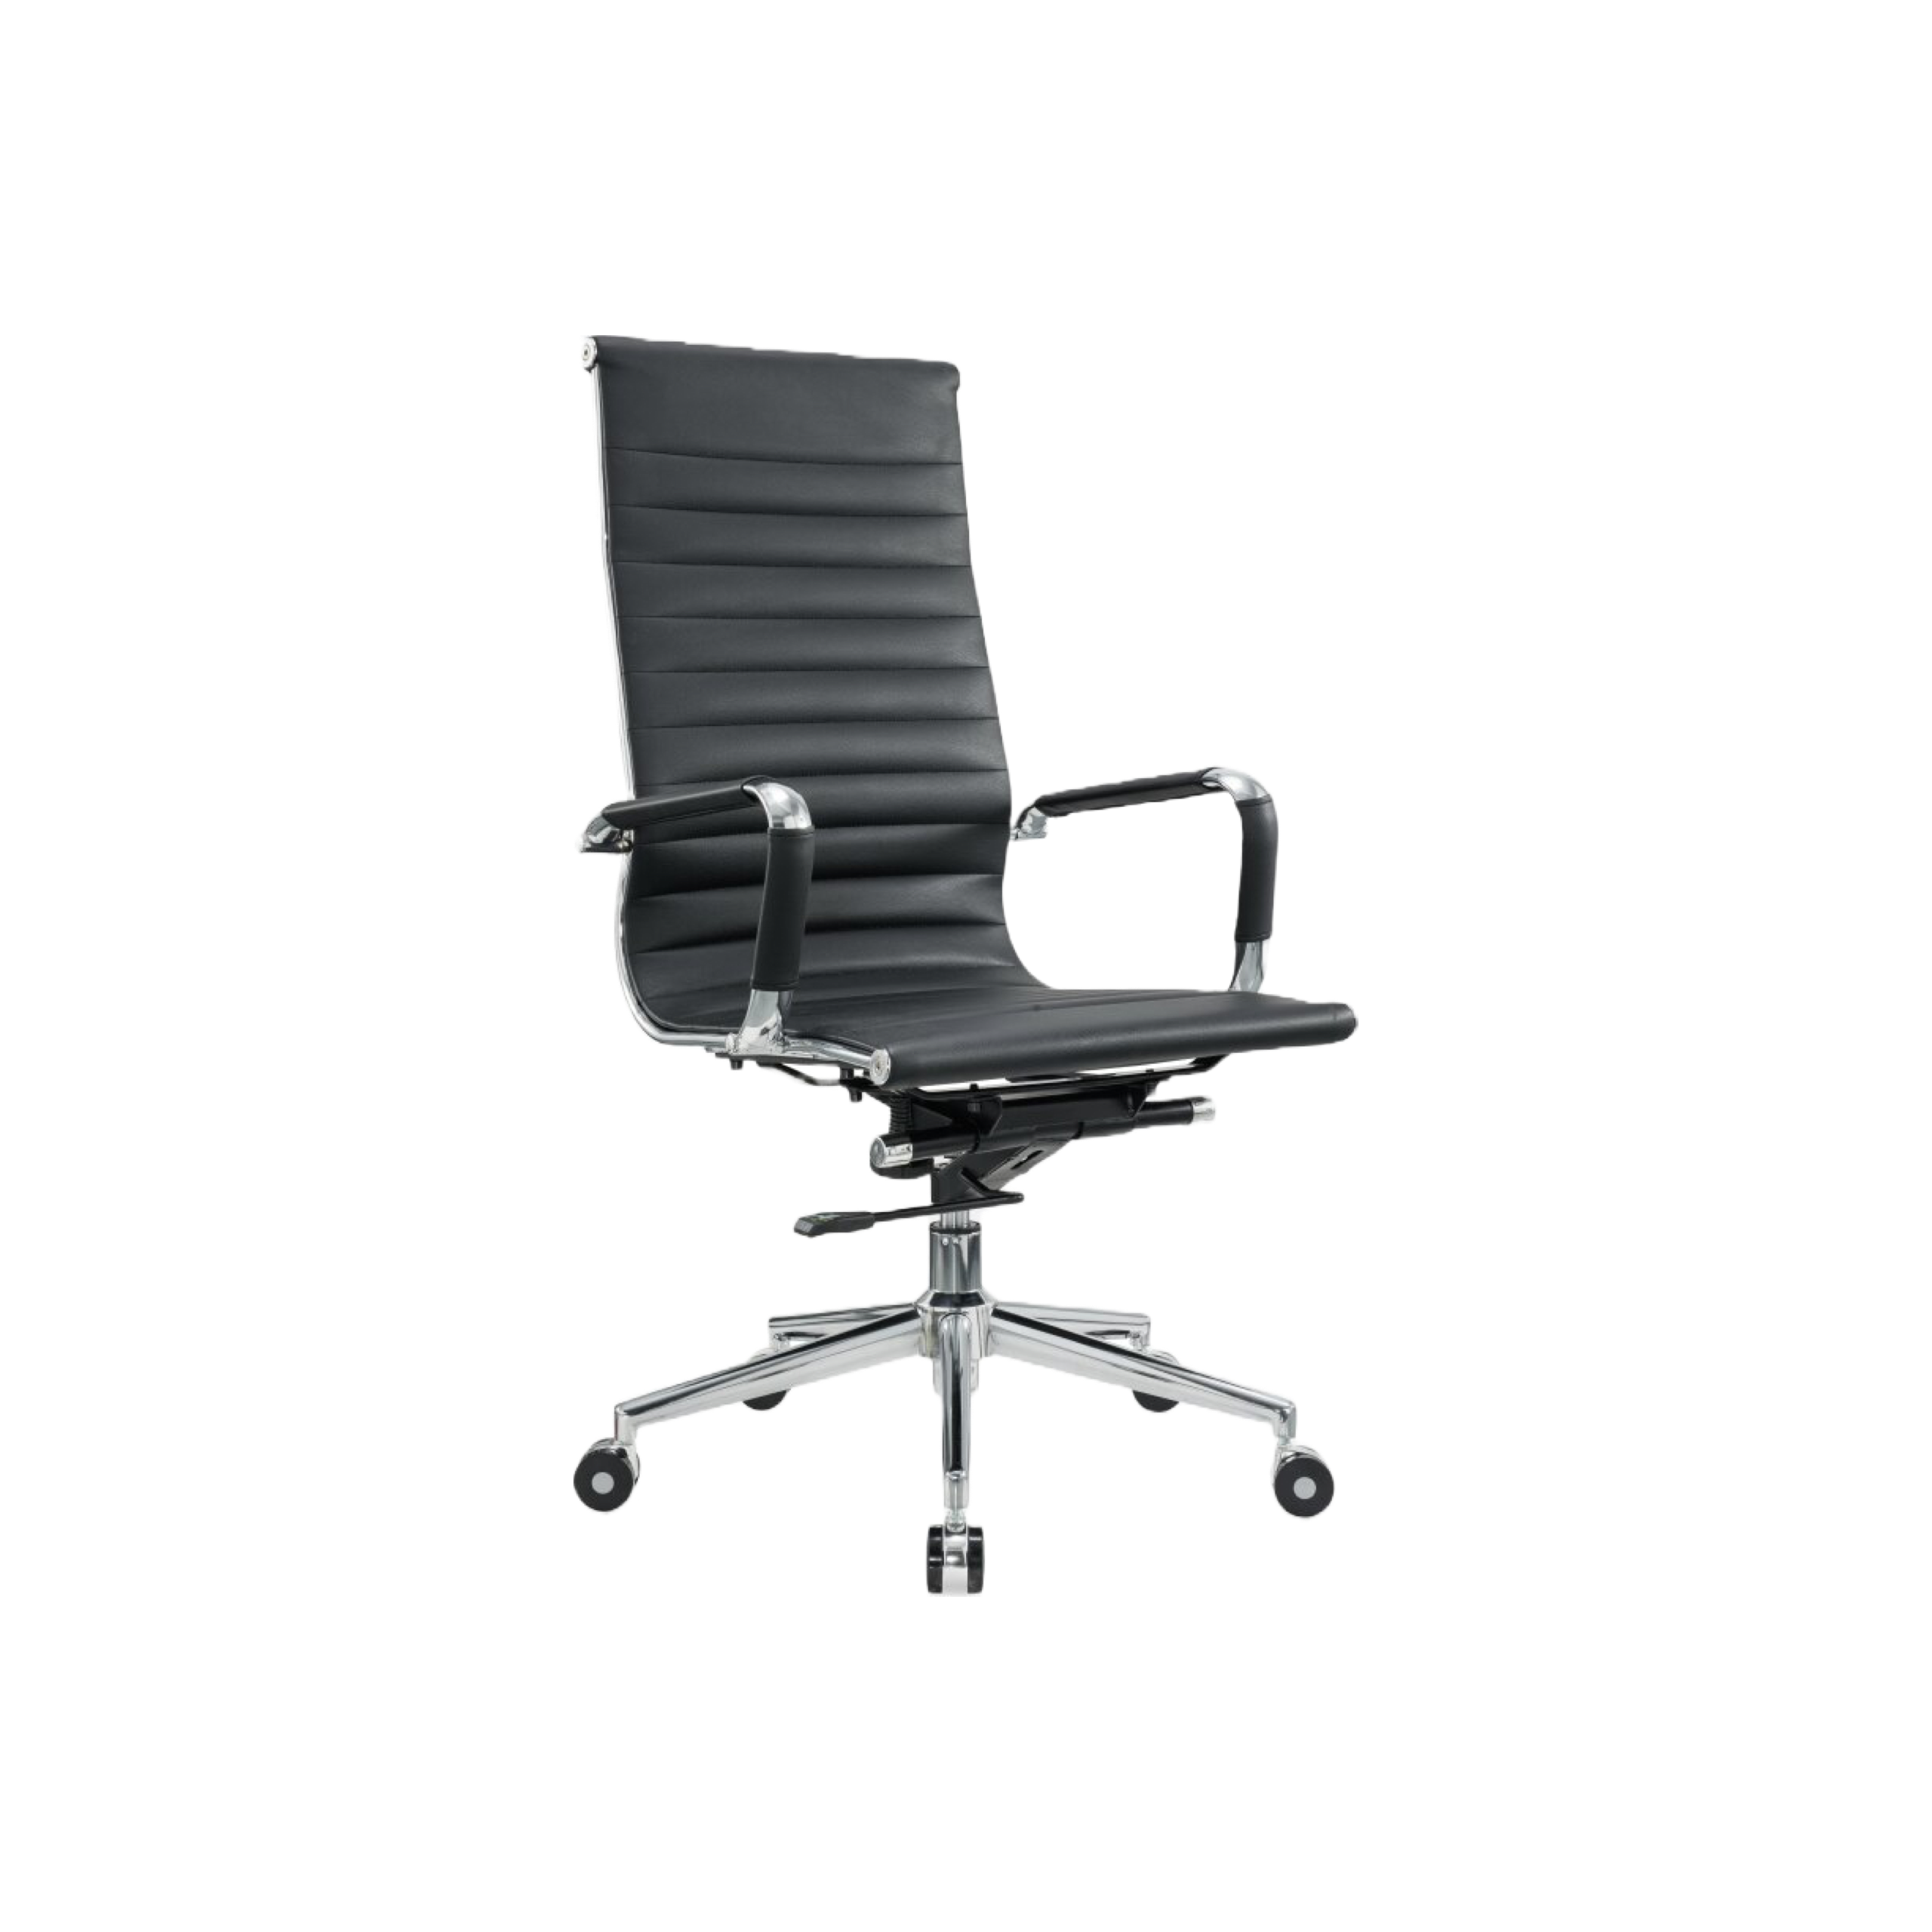 Black Executive Multi-purpose Office Chair High-Back